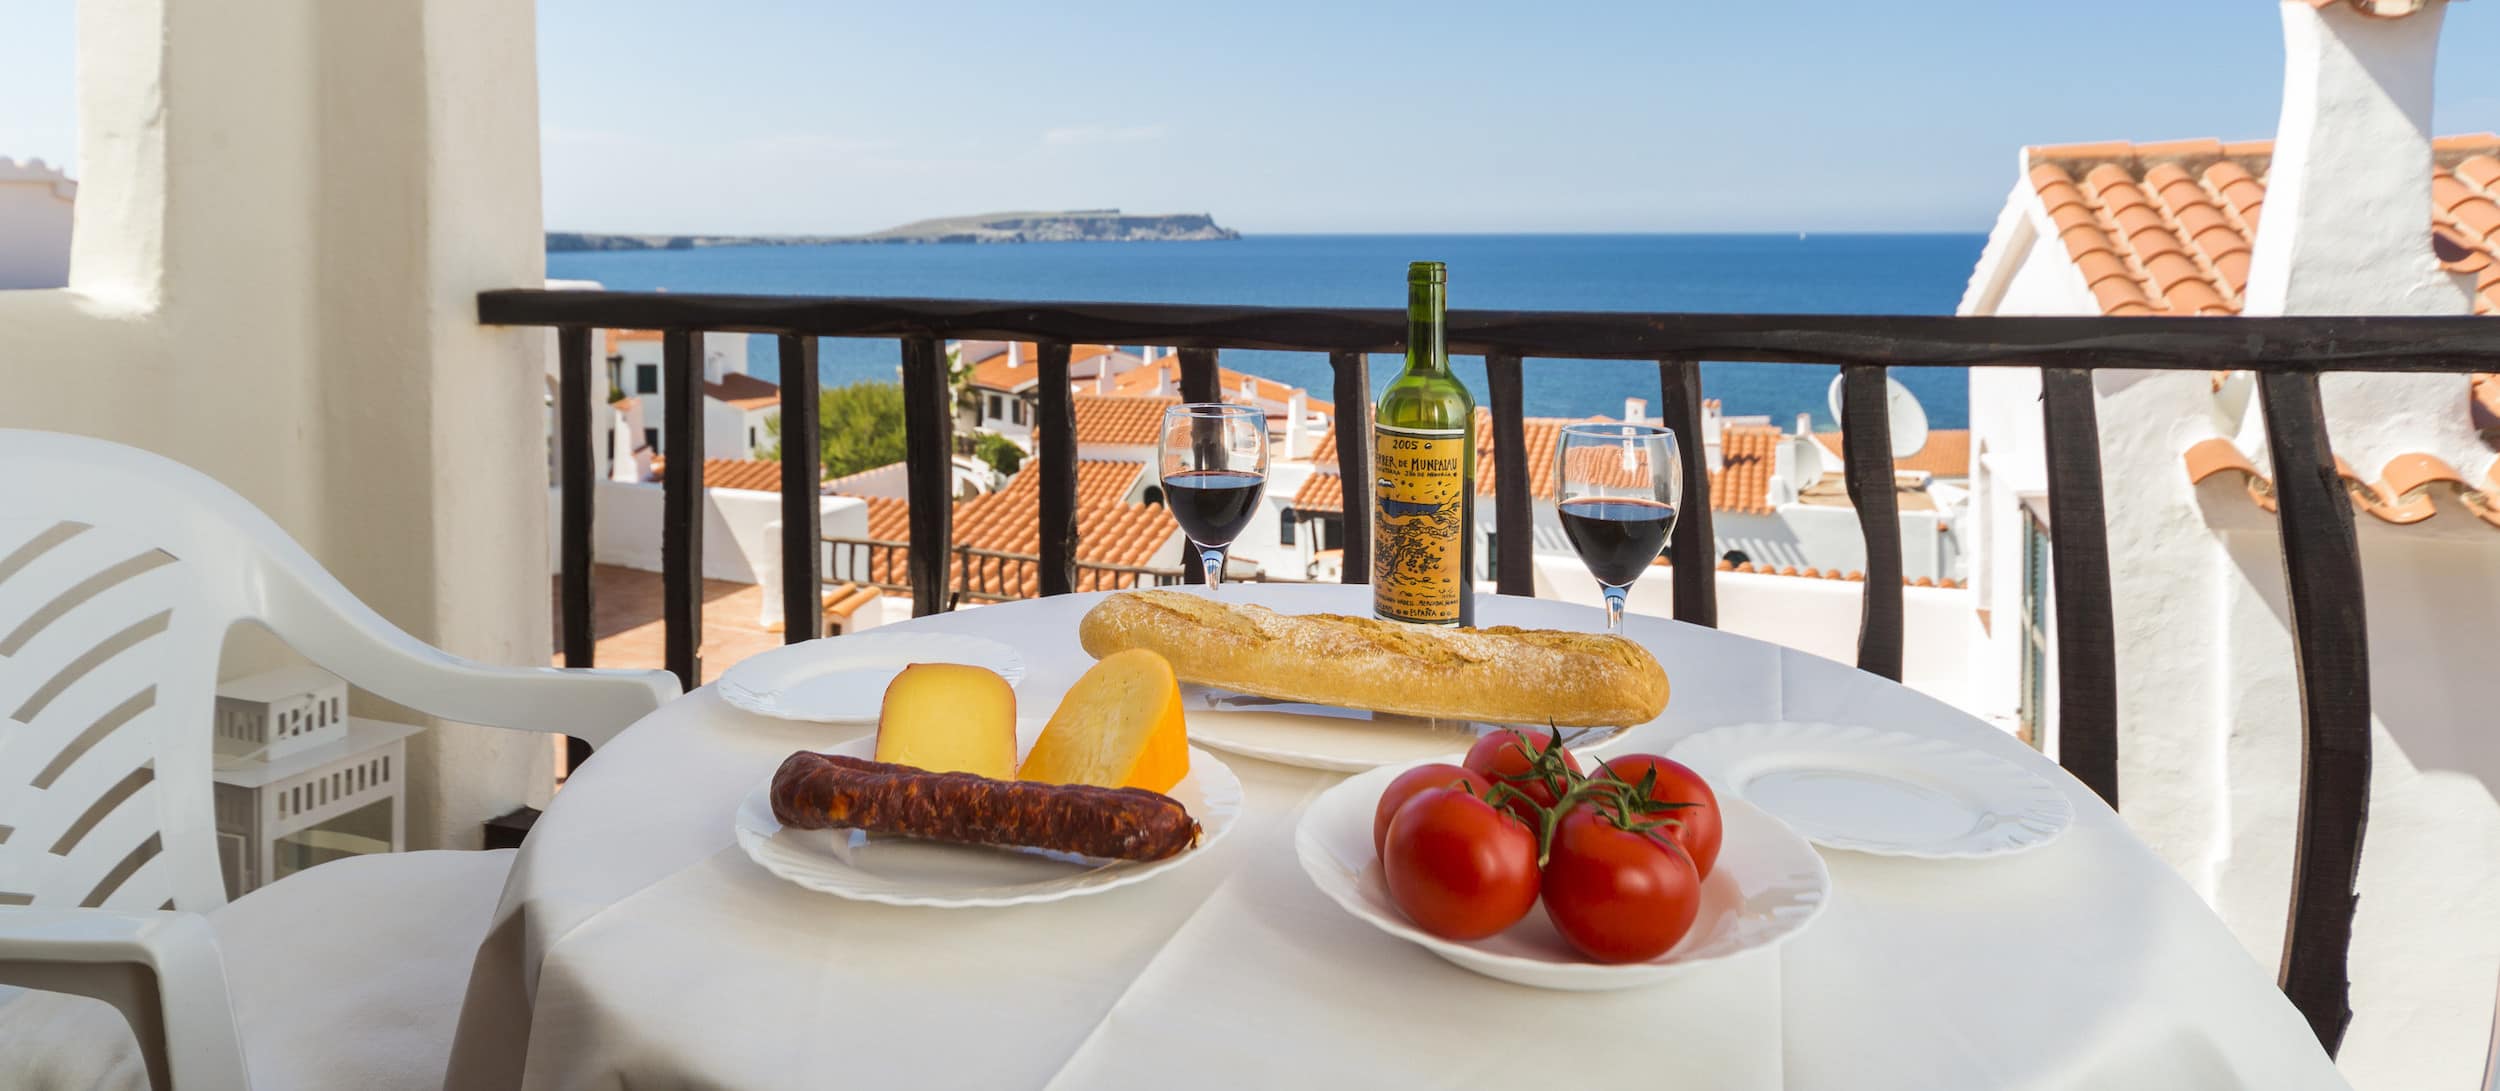 Last minute Menorca accommodation deals